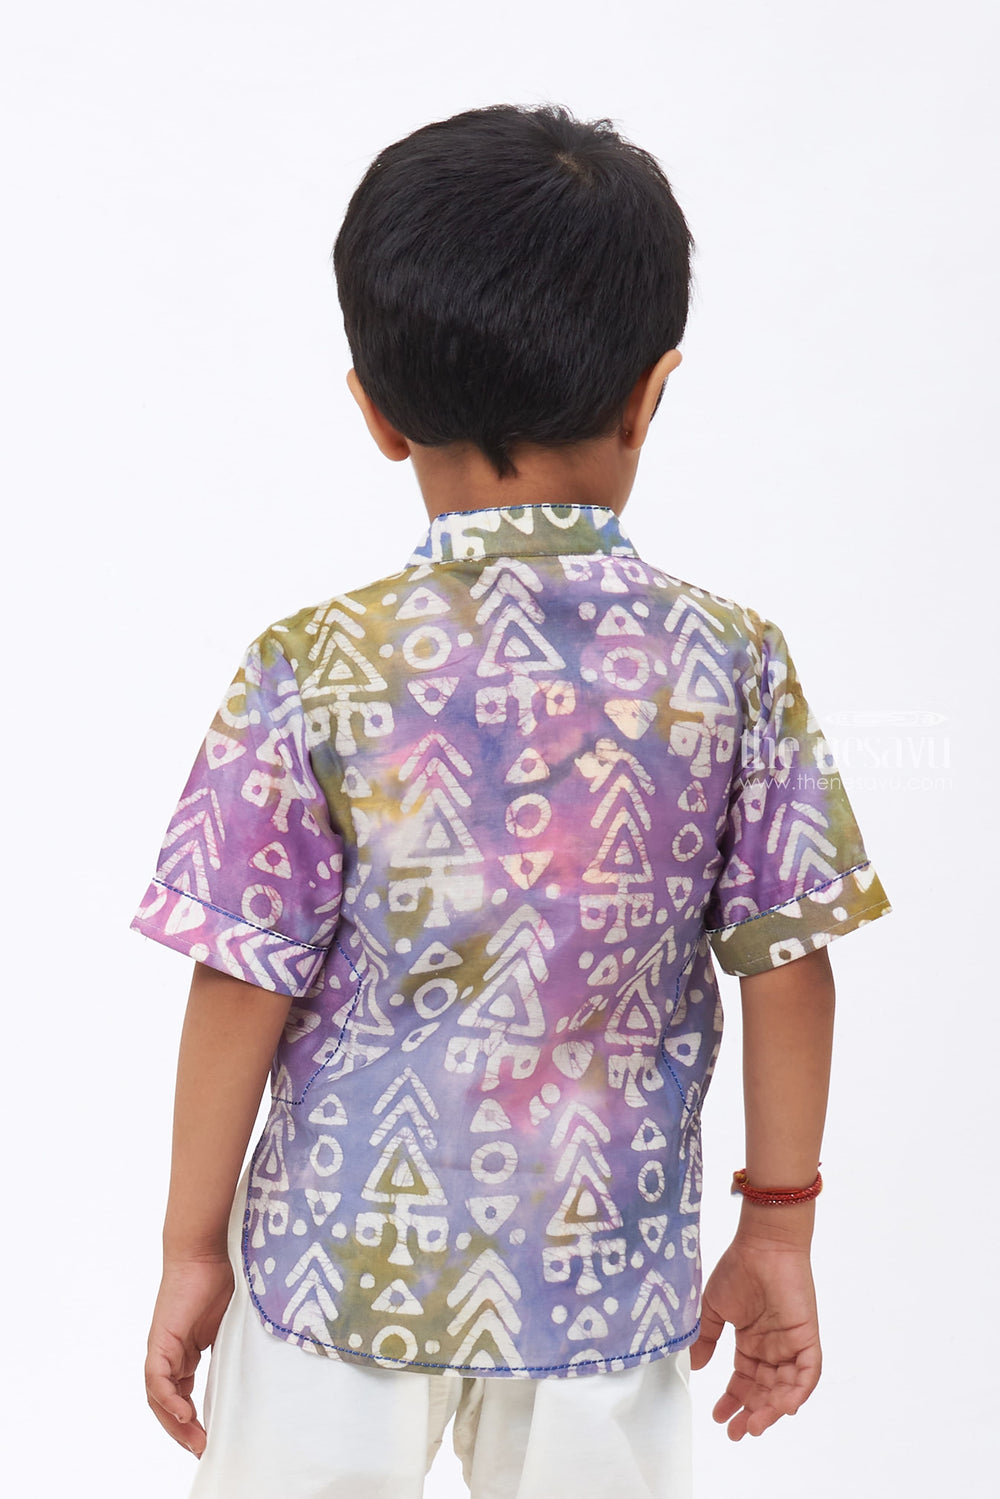 The Nesavu Boys Kurtha Shirt Boys Gradient Purple Cotton Shirt with Triangular Patterns Nesavu Boys Purple Cotton Shirt | Triangular Motif Design | Modern Casual Apparel | The Nesavu